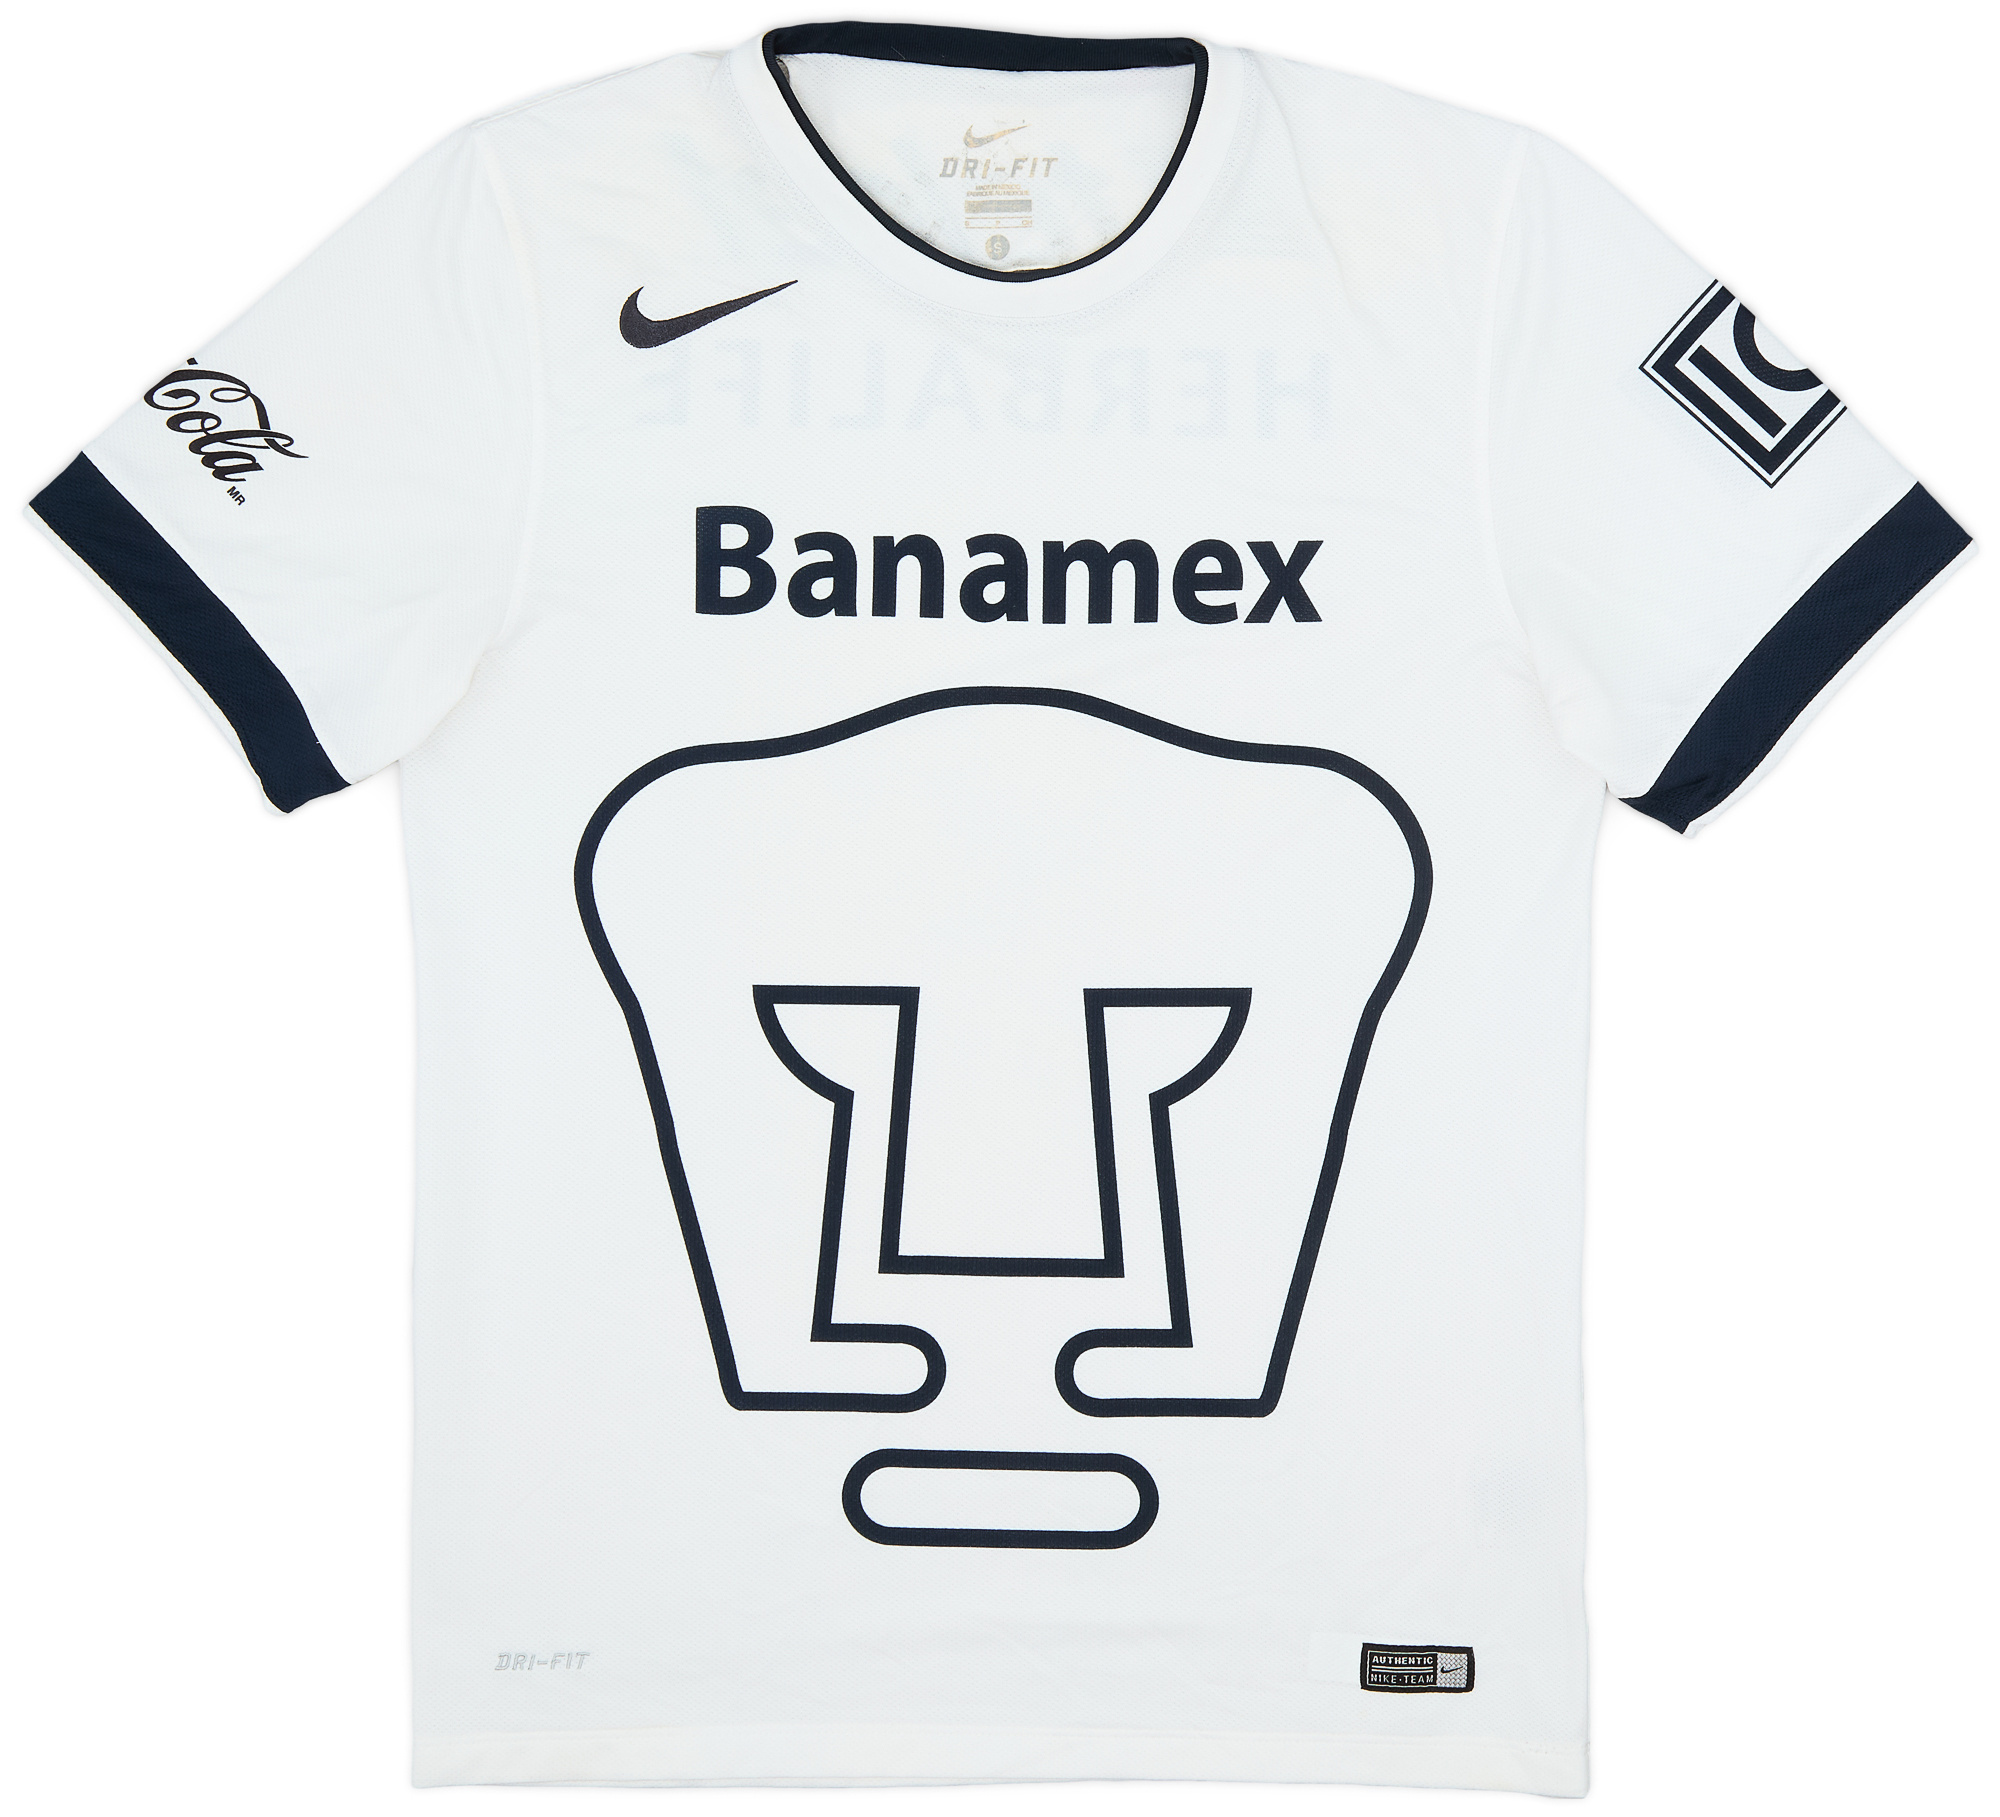 Club Universidad Nacional  Dritte Shirt (Original)